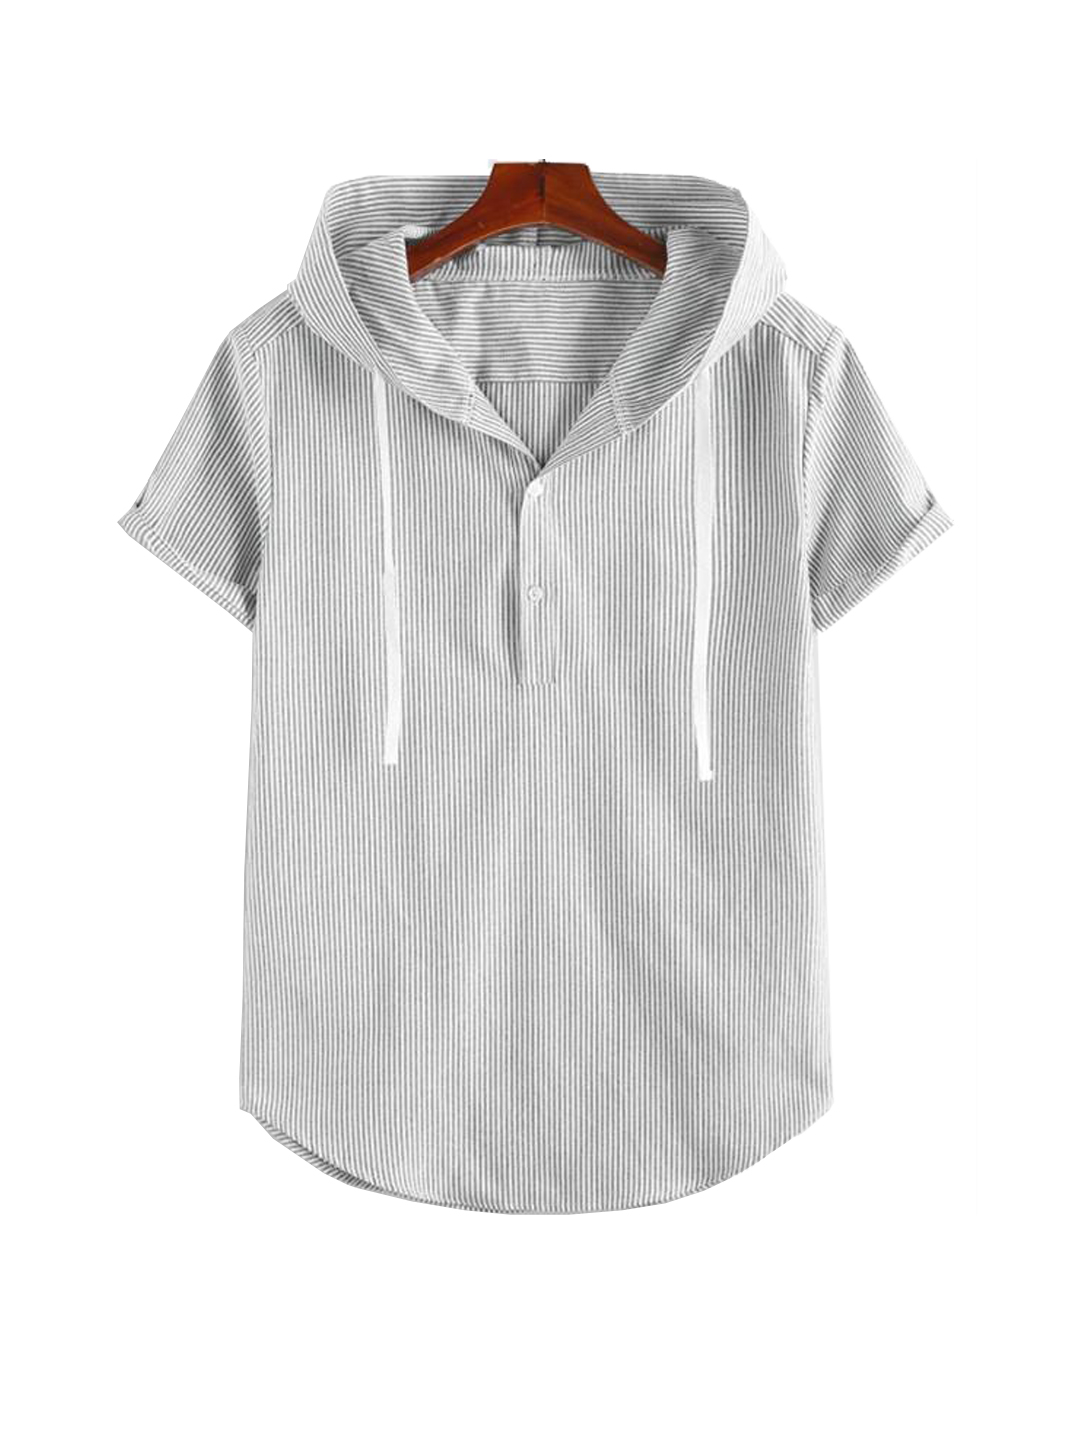 Men's Greg Striped Casual Shirt-poisonstreetwear.com